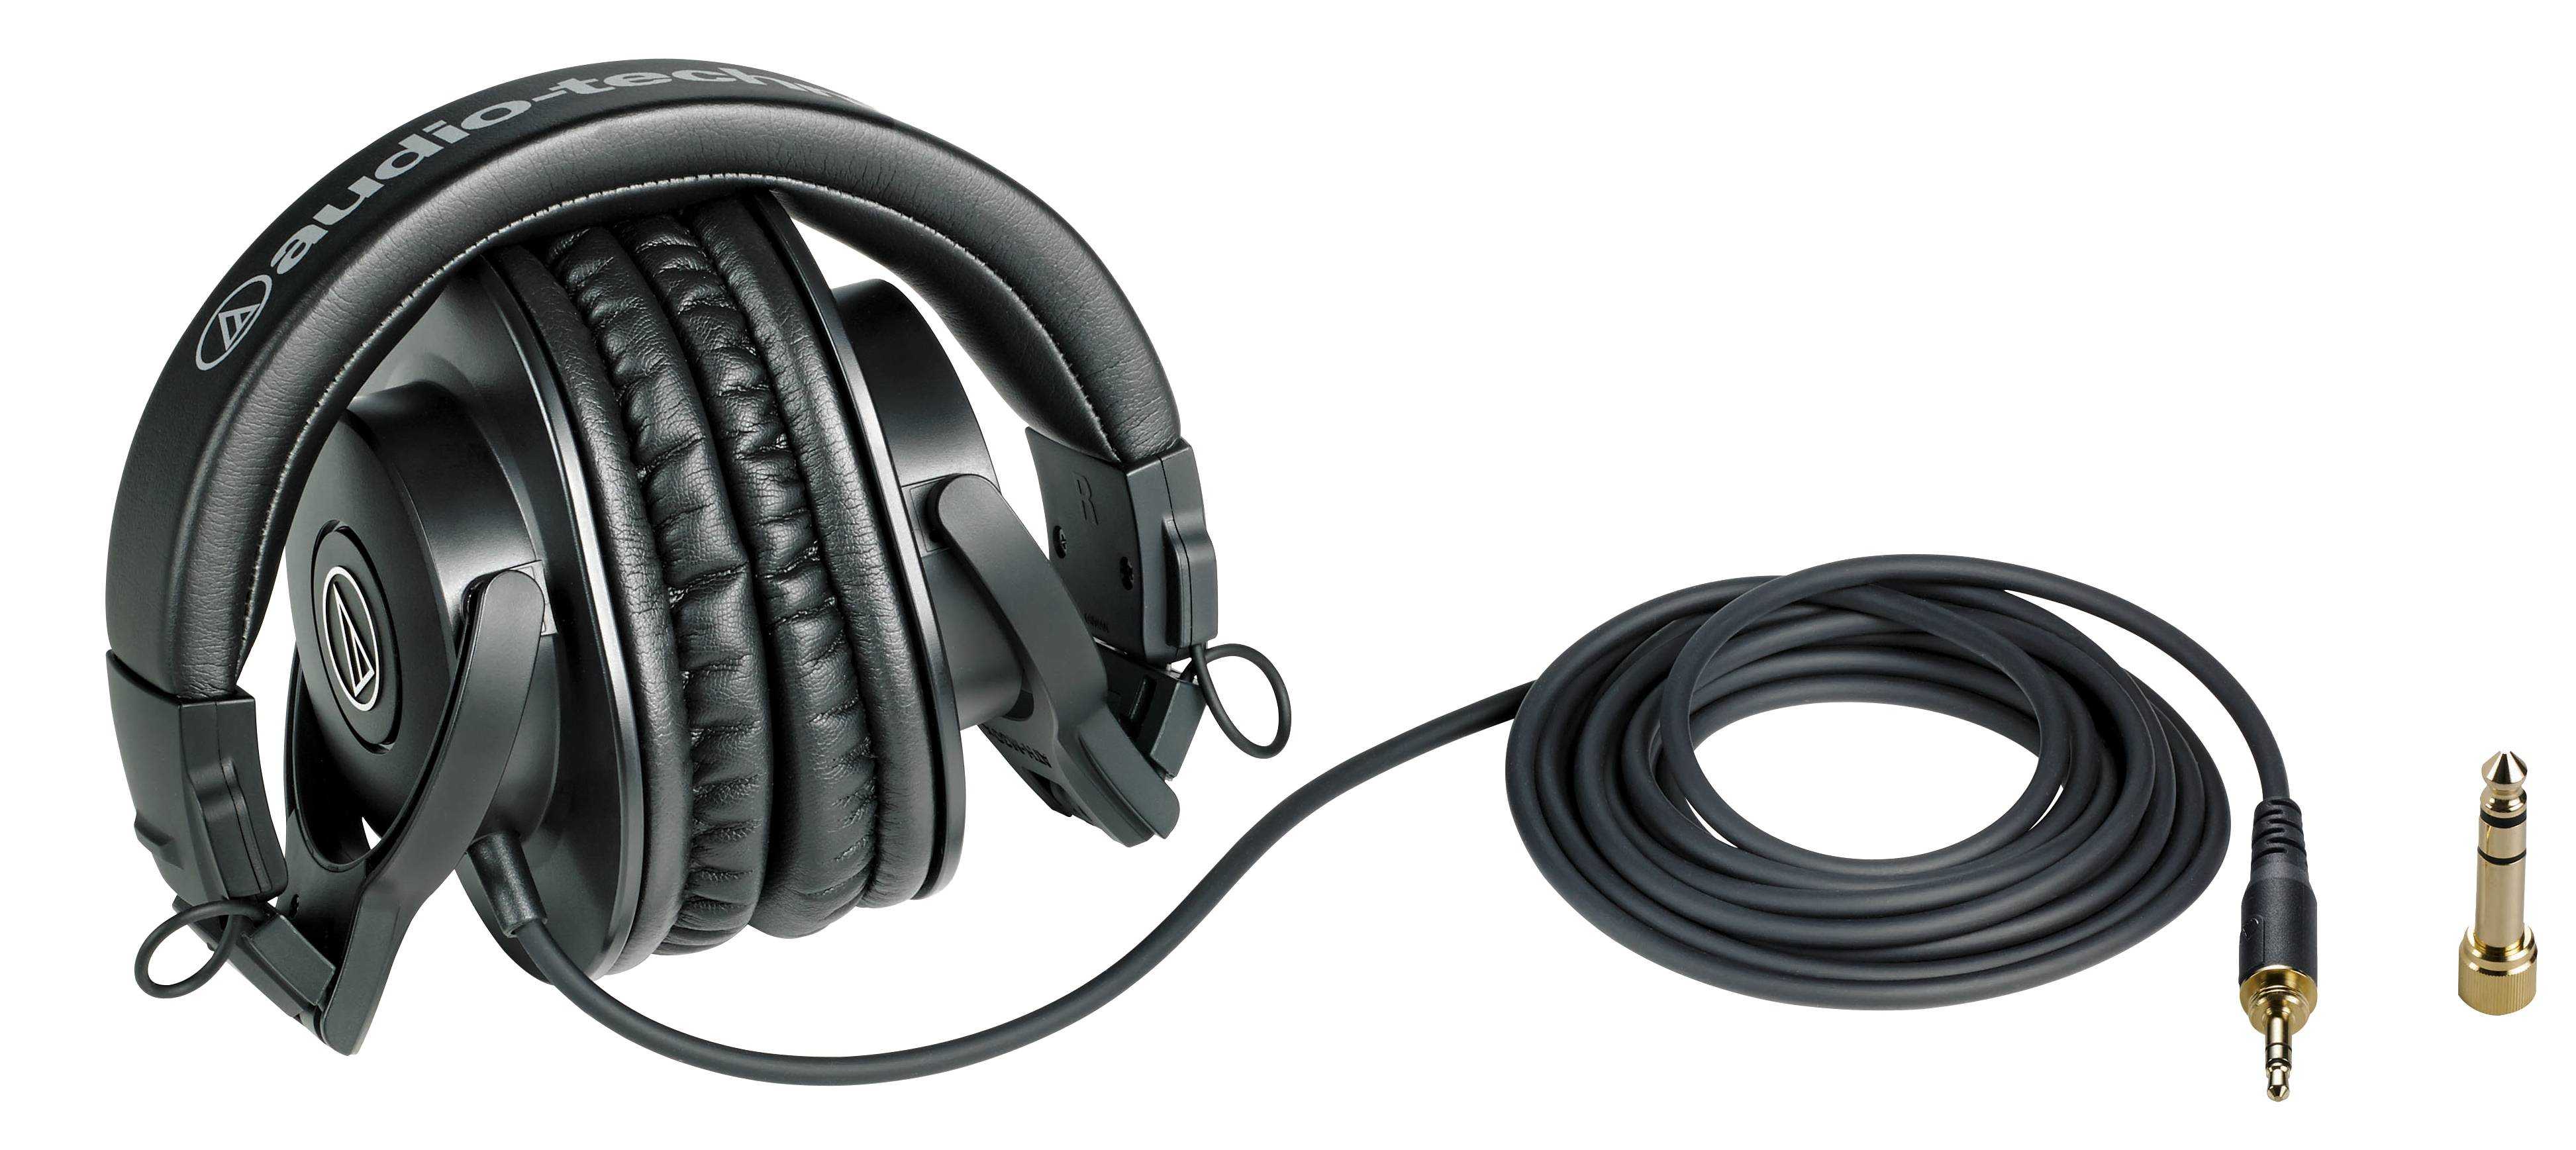 Audio-technica ath-m20x 
            headphones review